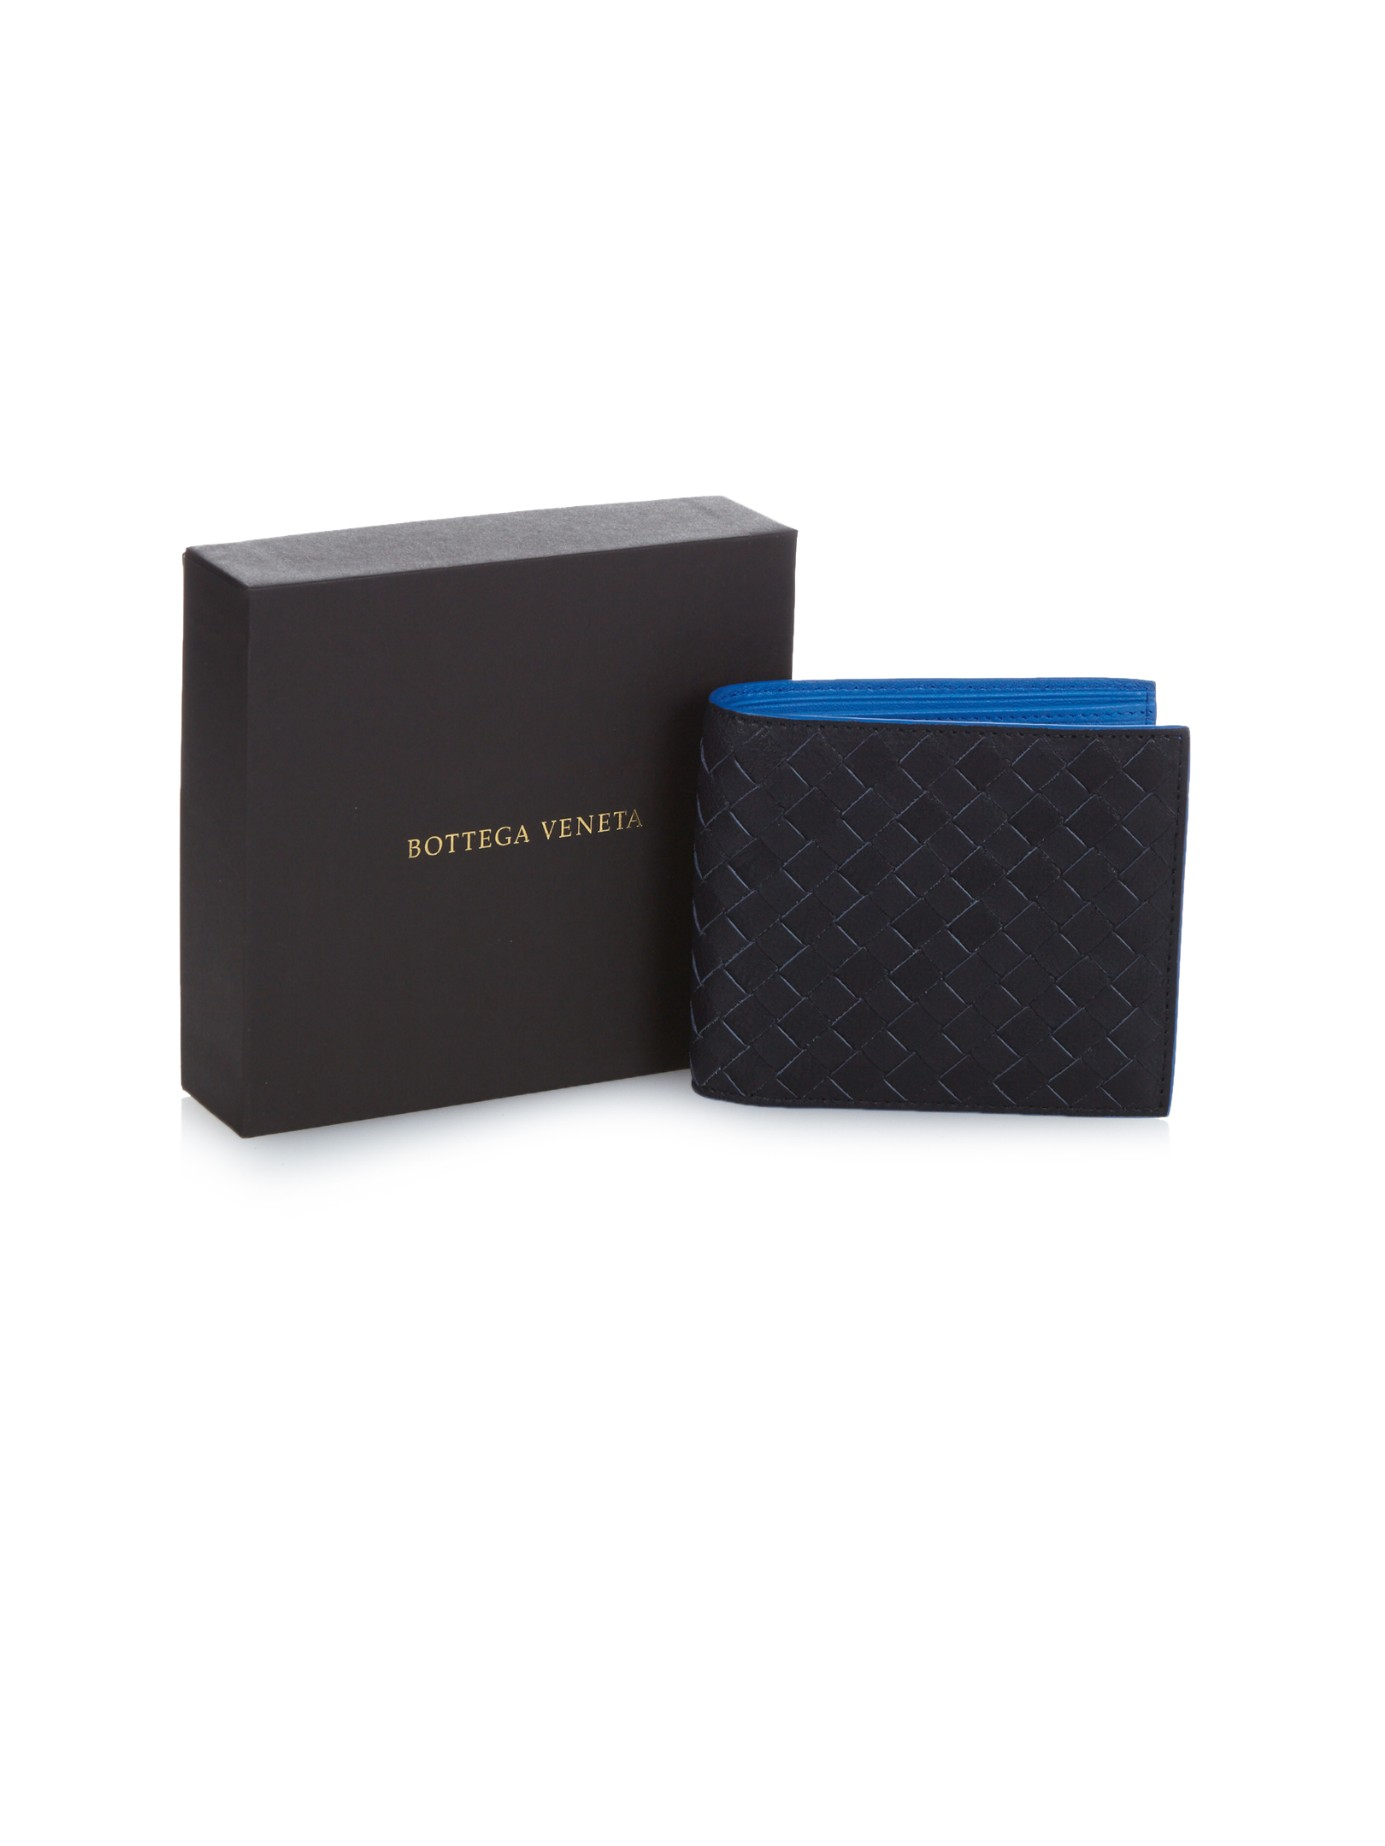 Lyst - Bottega Veneta Bi-colour Intrecciato Leather Wallet in Blue for Men